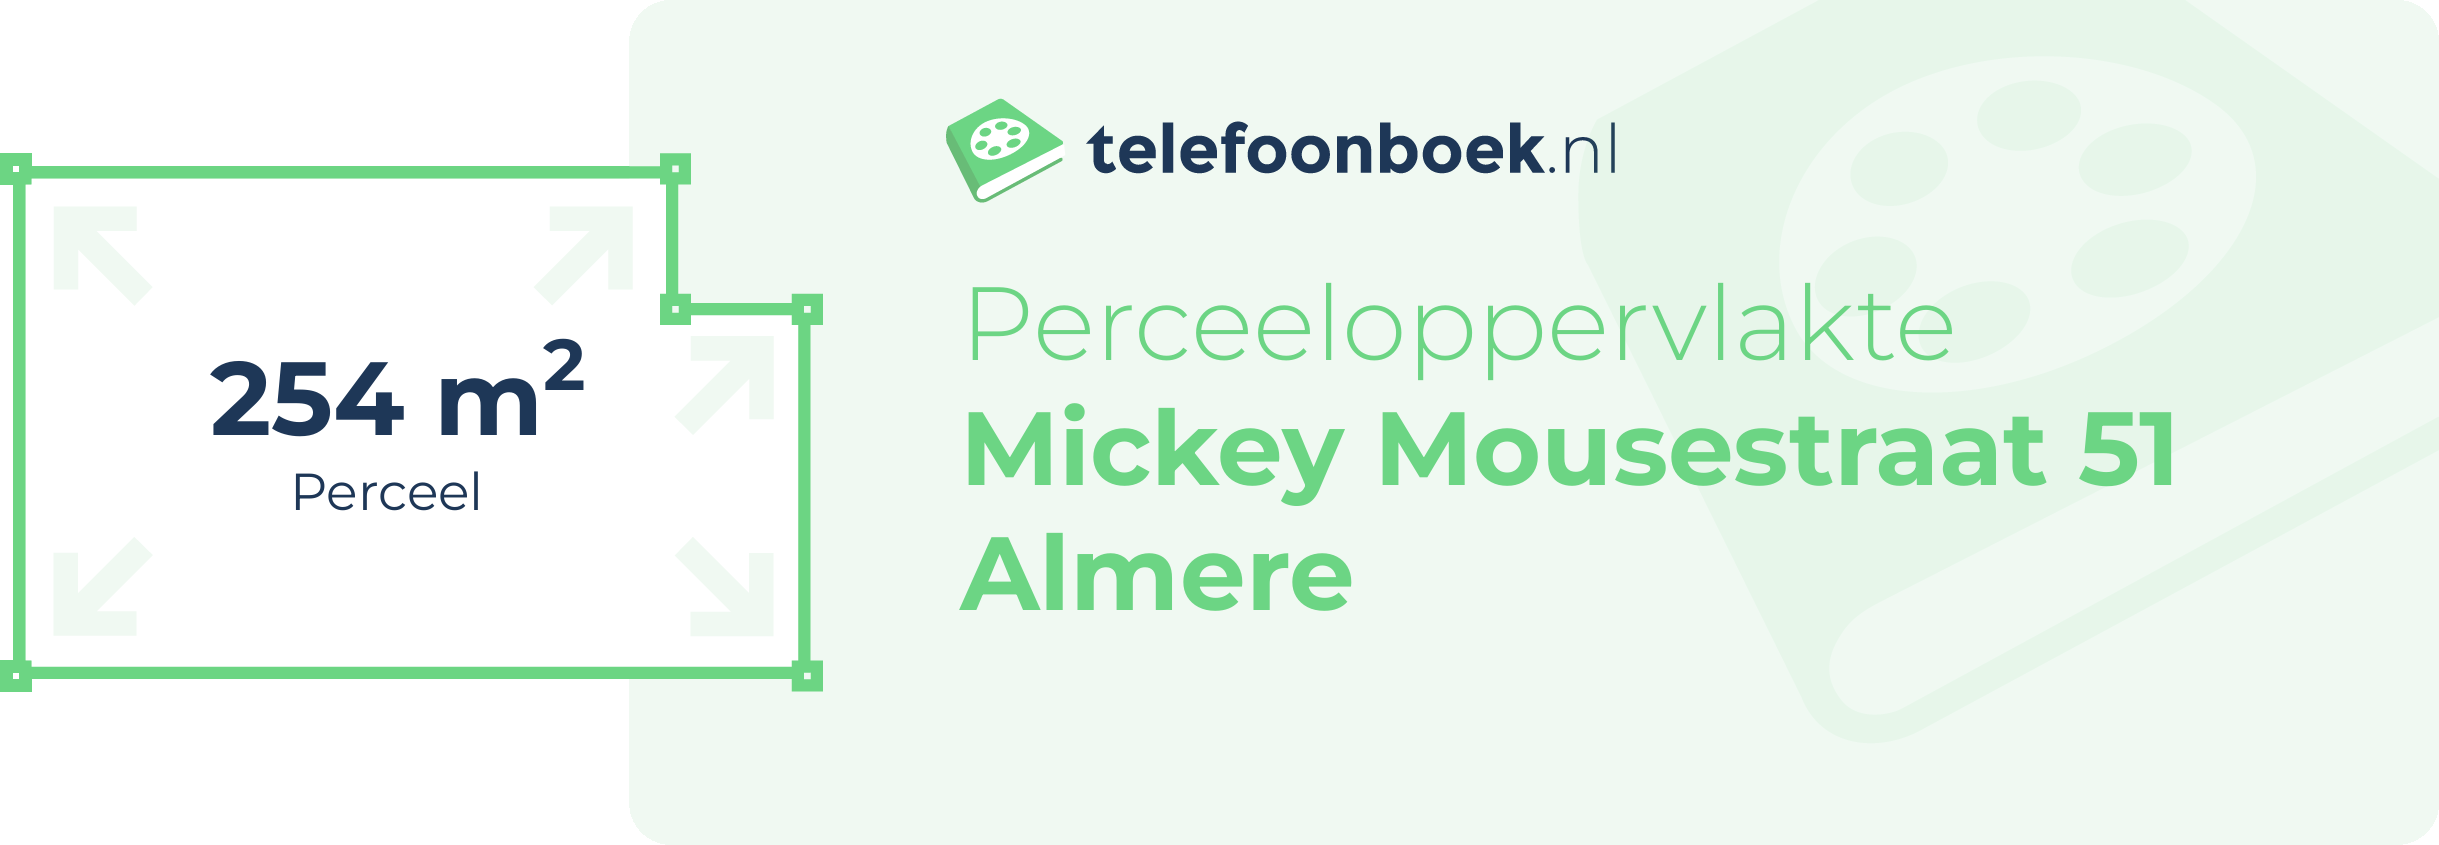 Perceeloppervlakte Mickey Mousestraat 51 Almere